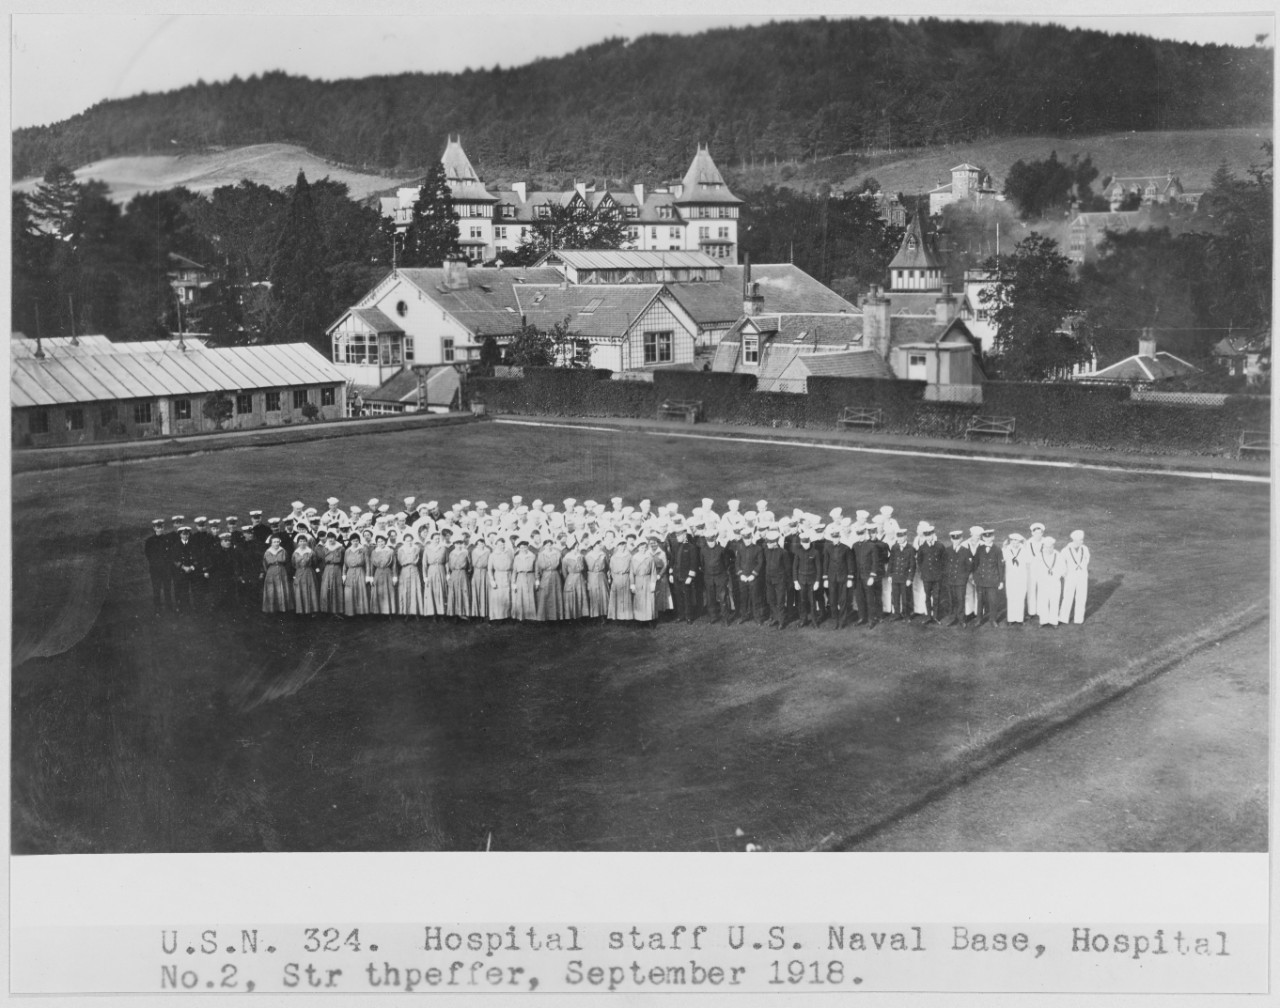 Portrait of Hospital Staff from above, U.S. Naval Base Hospital No. 2, Strathpeffer, Scotland. September 1918